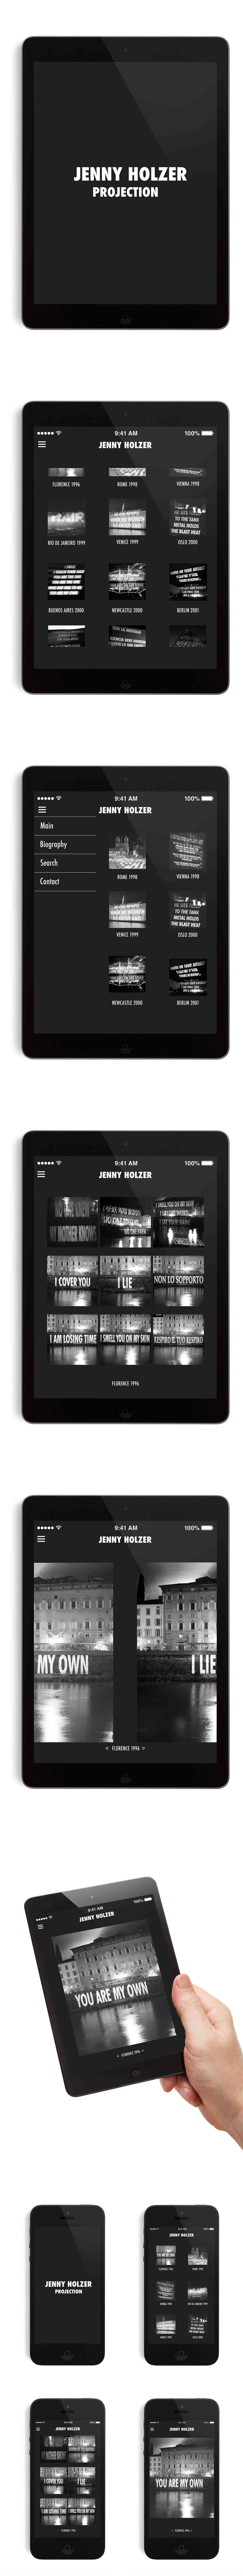 Jenny Holzer #2 (App Design)